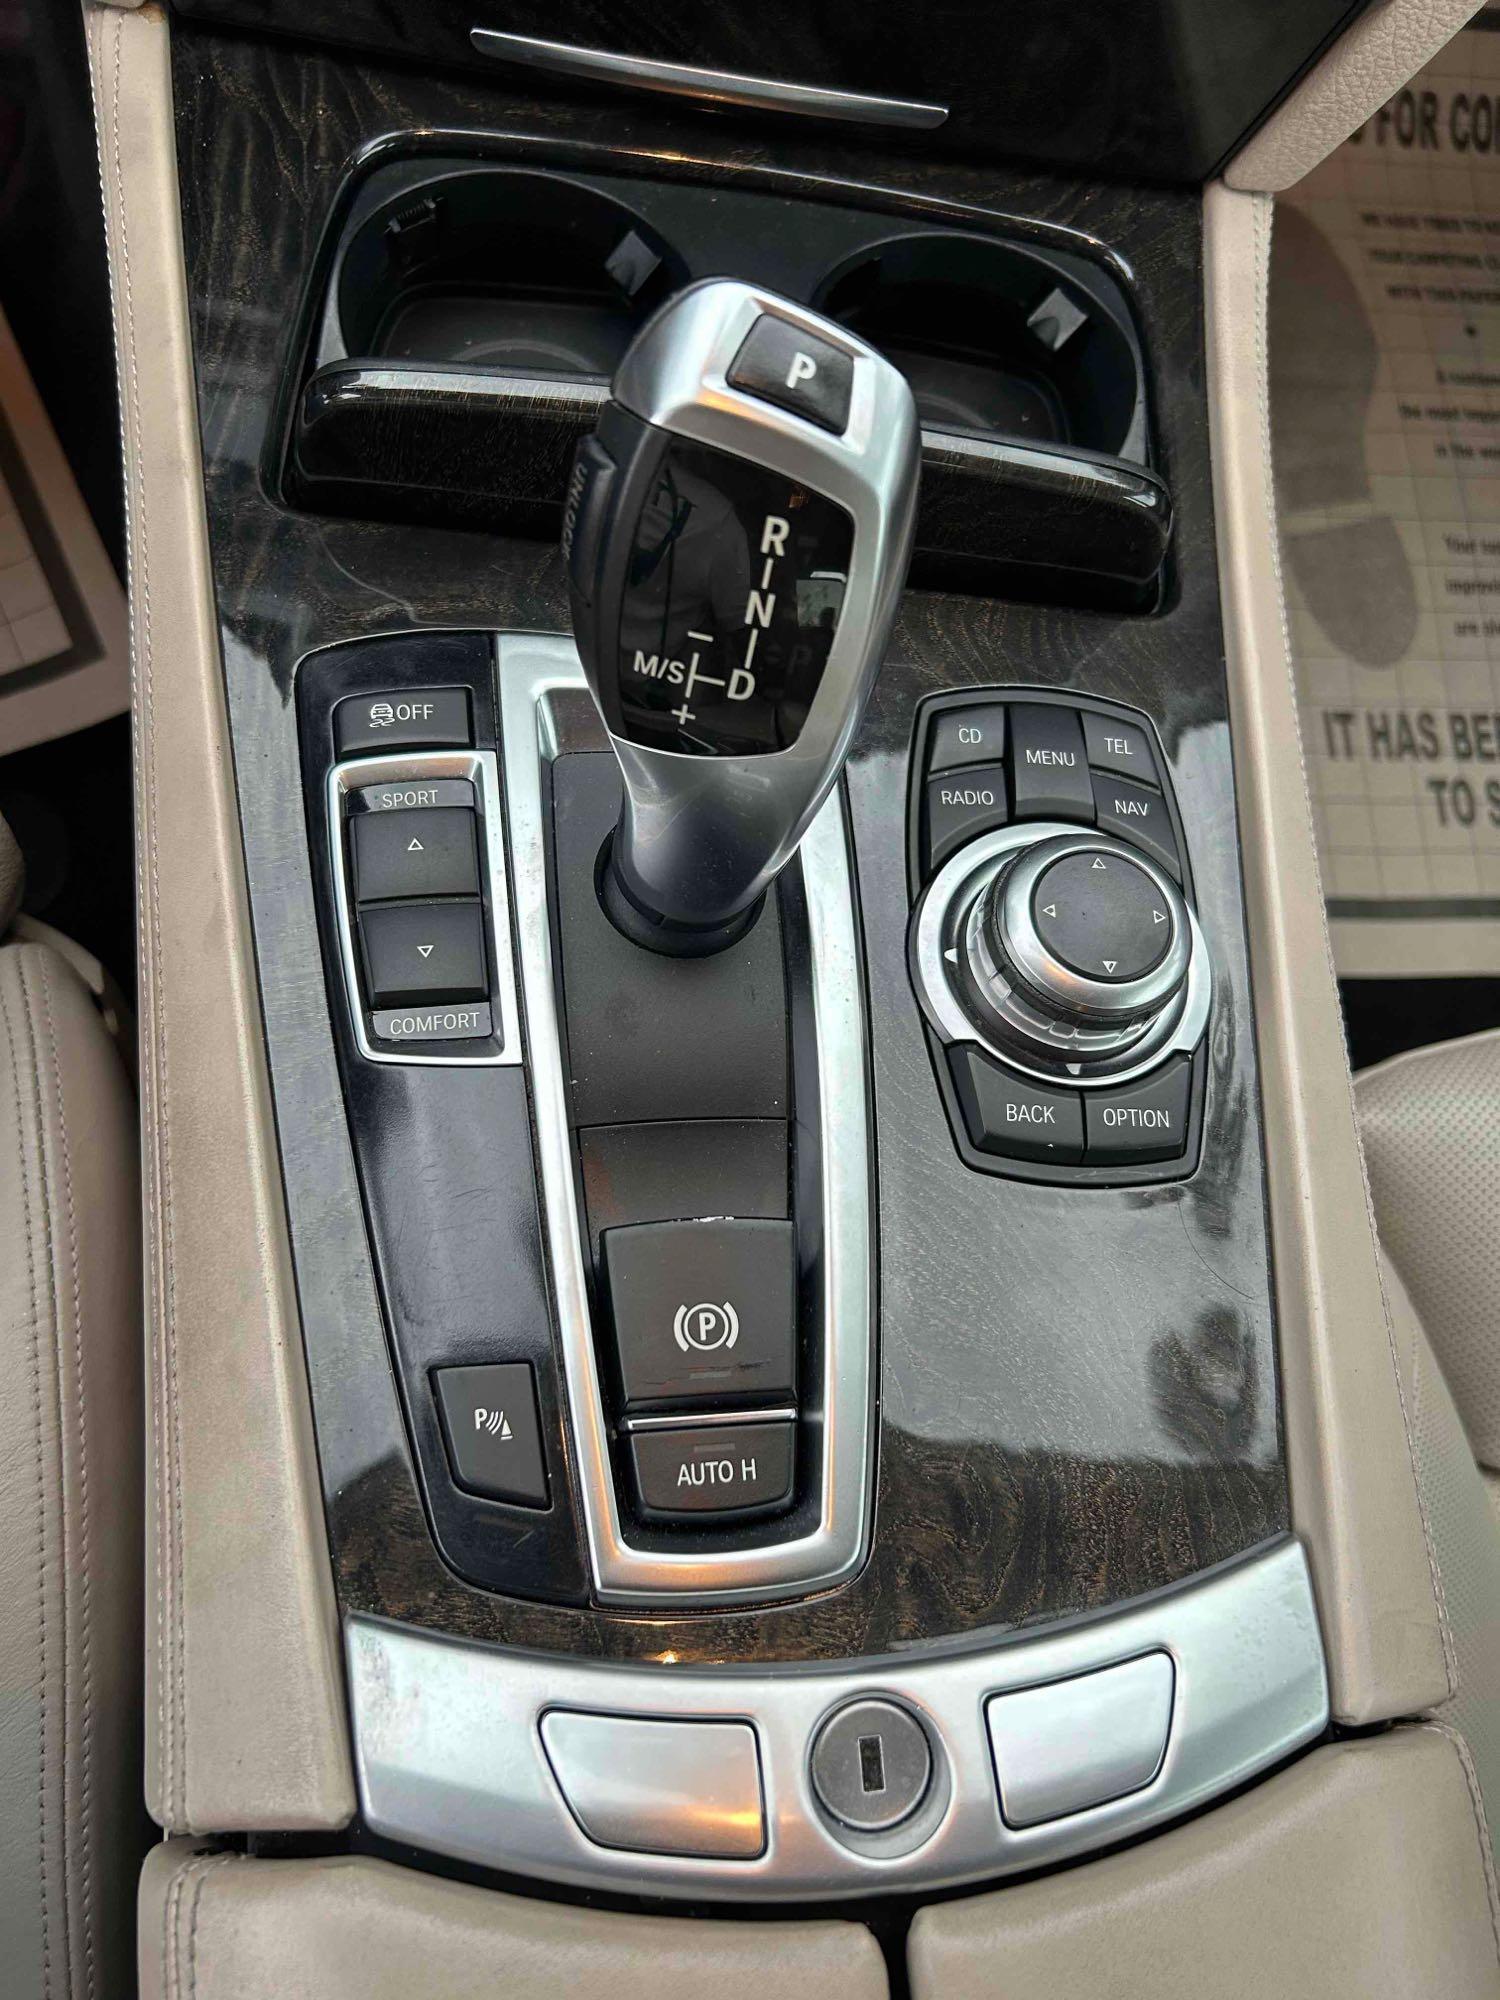 2012 BMW 7 series